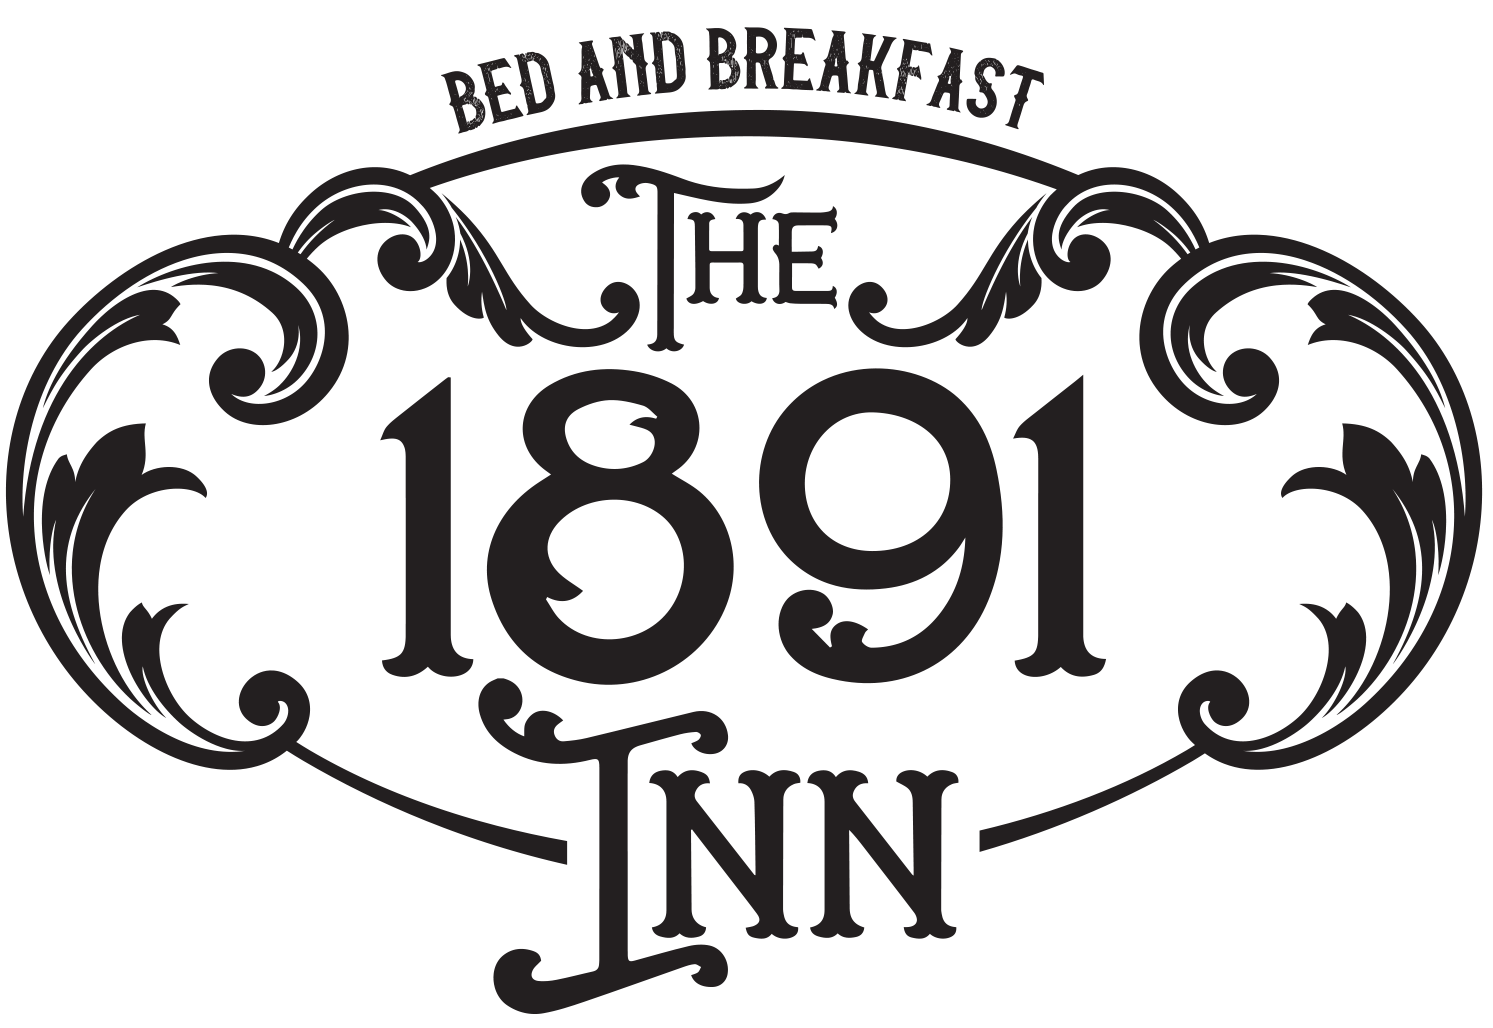 The 1891 Inn Bed and Breakfast logo design